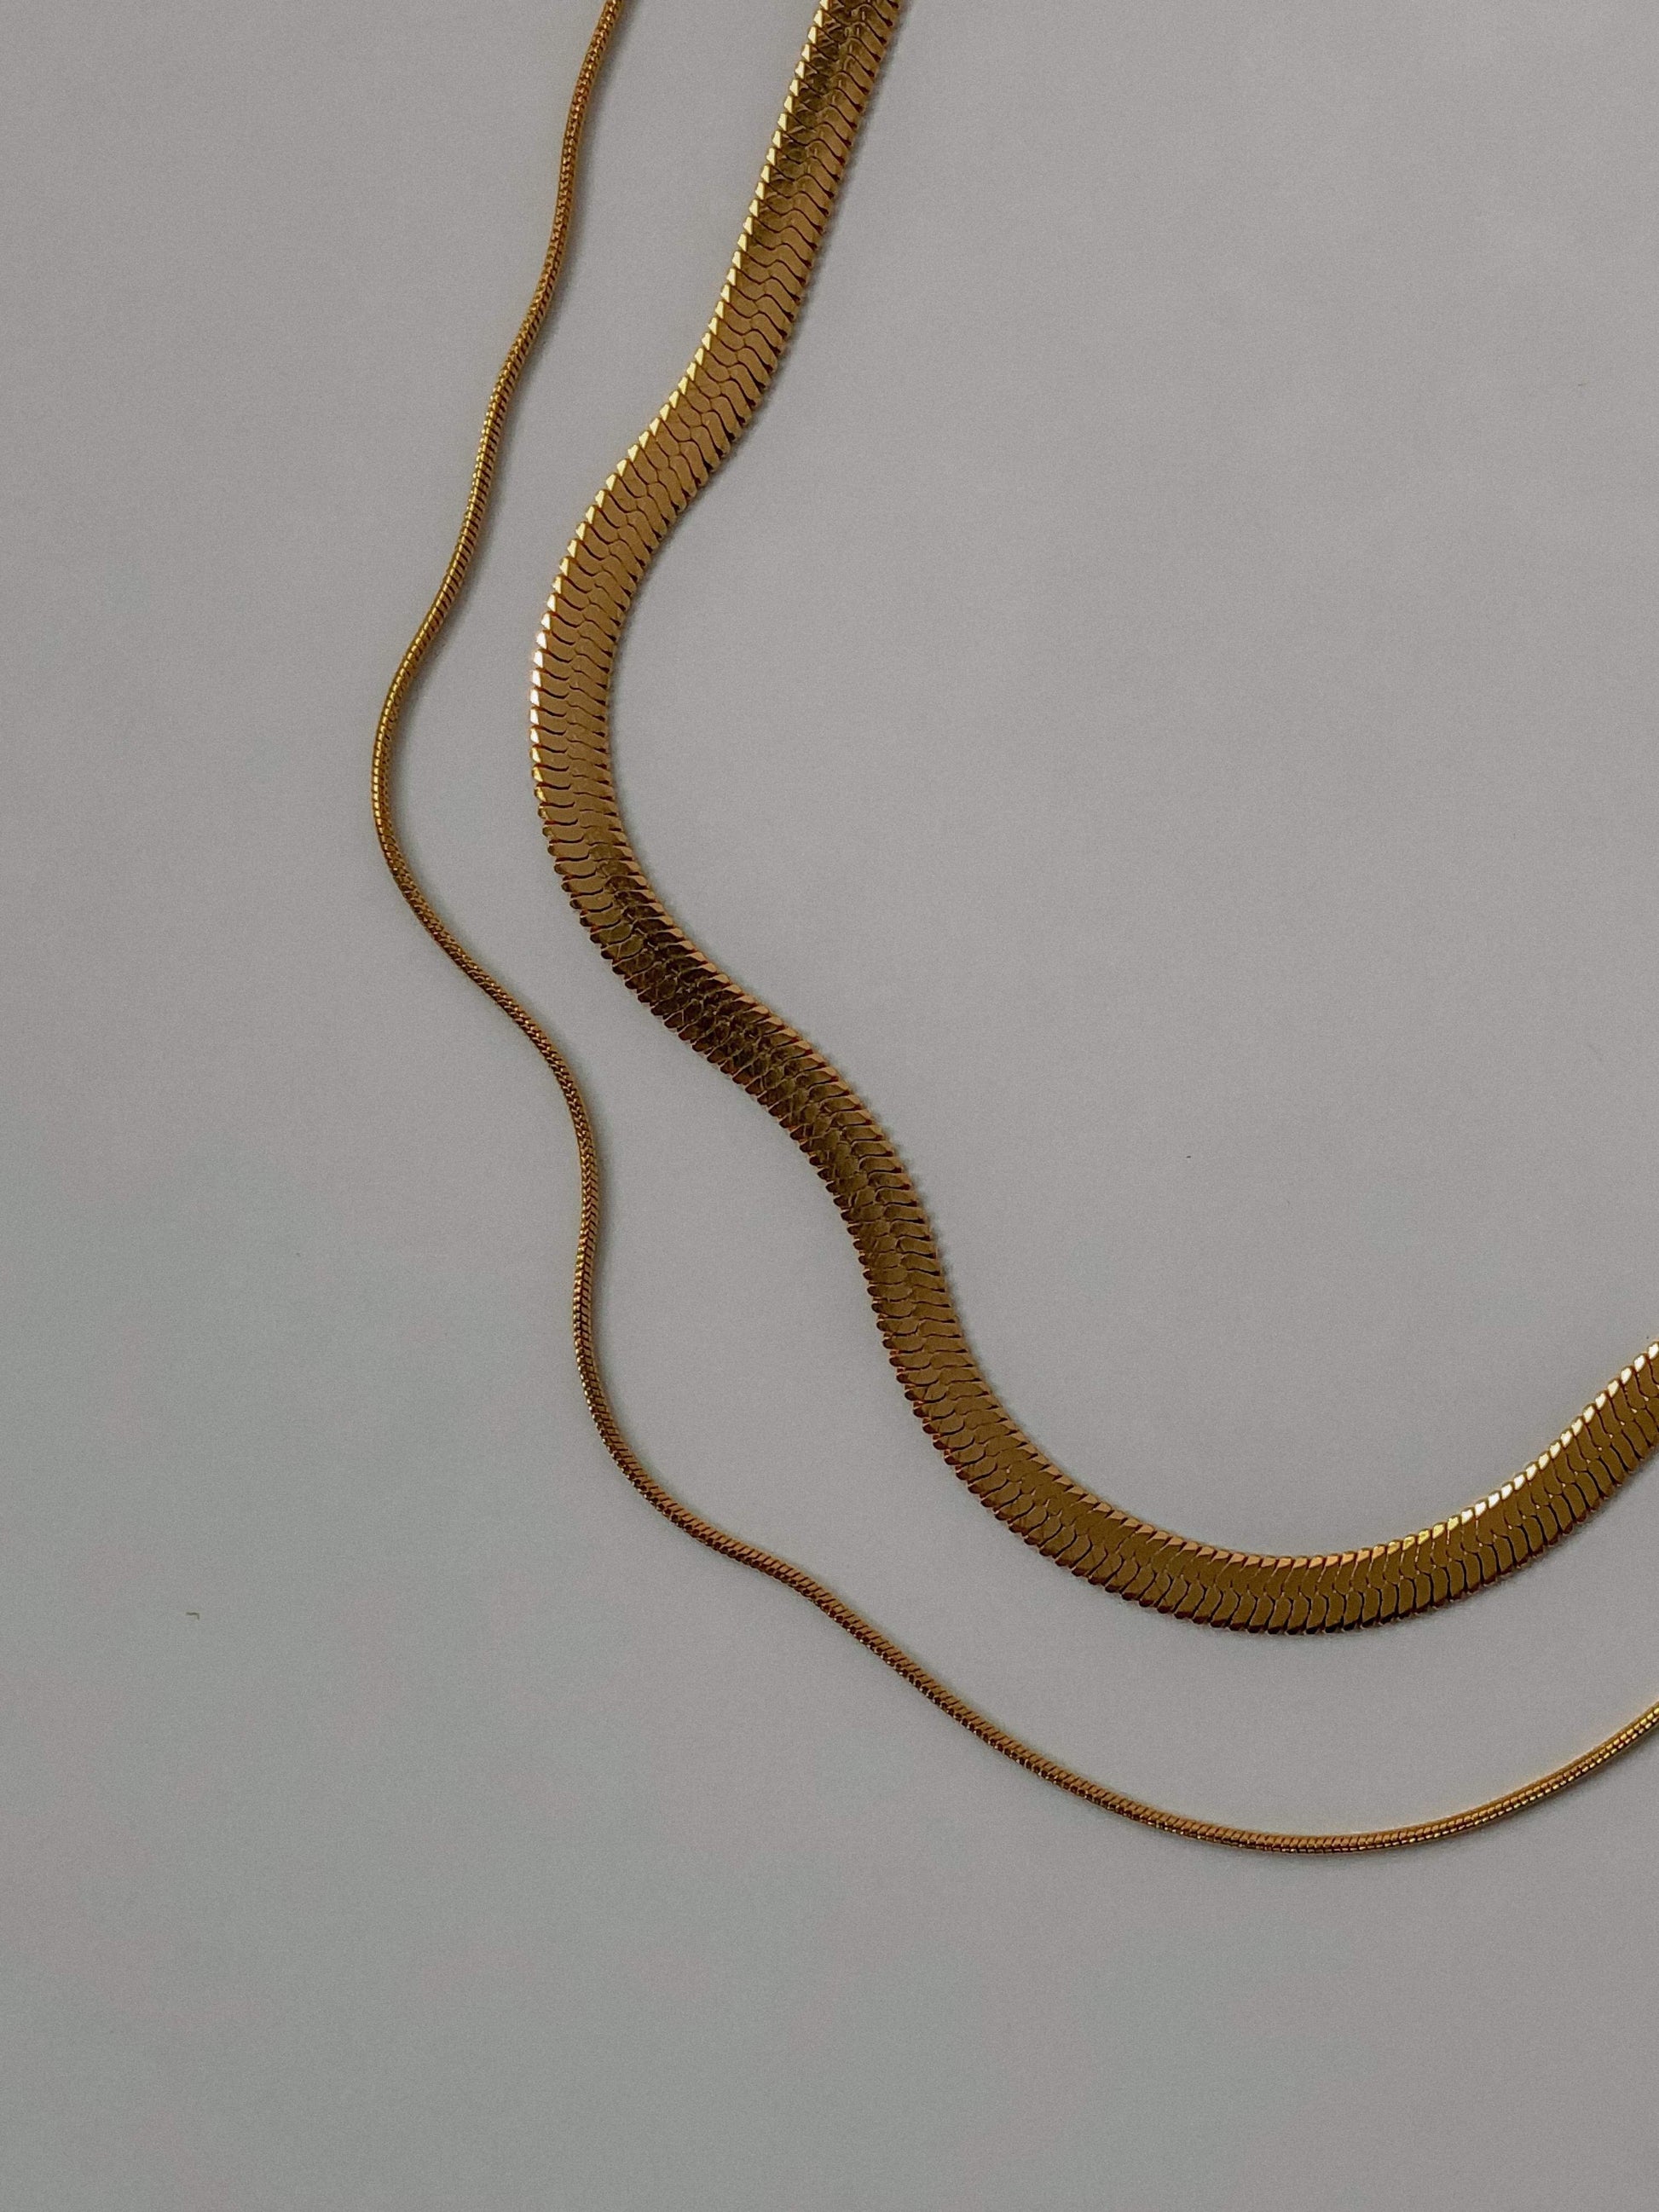 18K gold herring bone necklace